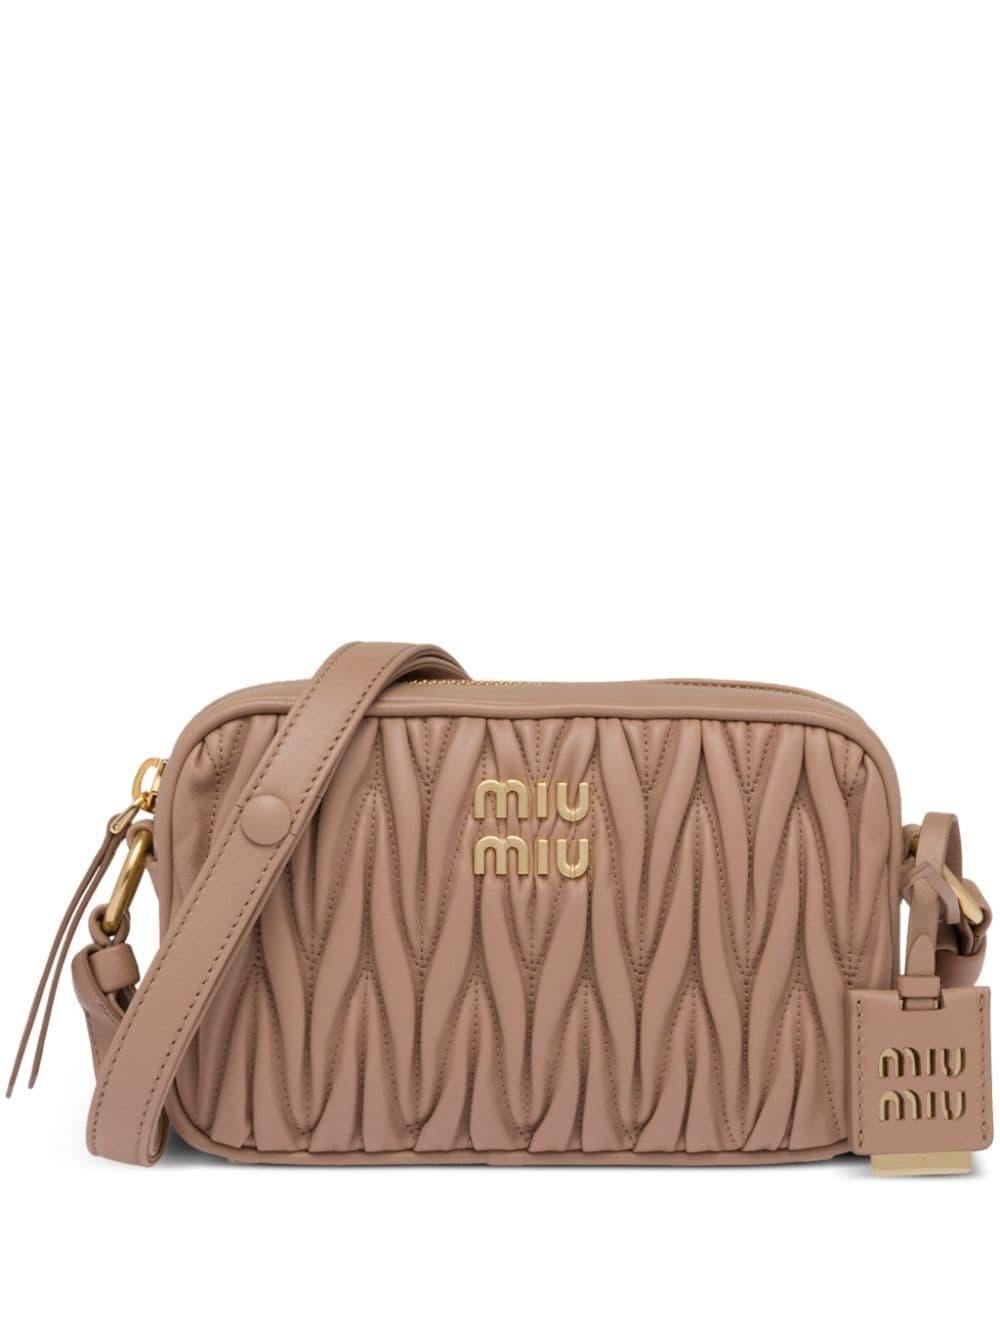 MIU MIU Nappa Knot Top Handle Shoulder Bag Beige | FASHIONPHILE